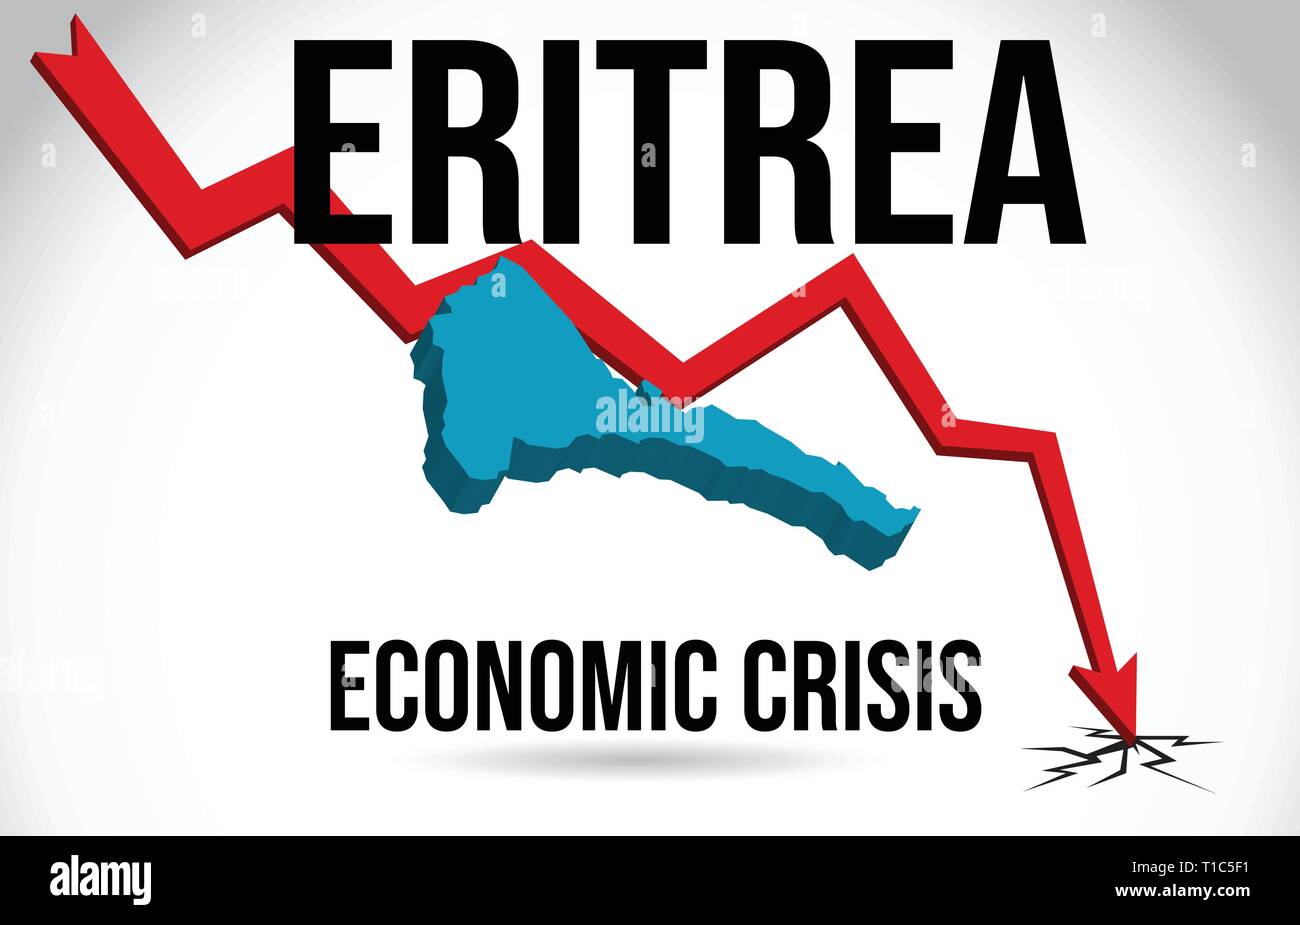 Eritrea Map Financial Crisis Economic Collapse Market Crash Global Meltdown Vector Illustration. Stock Vector